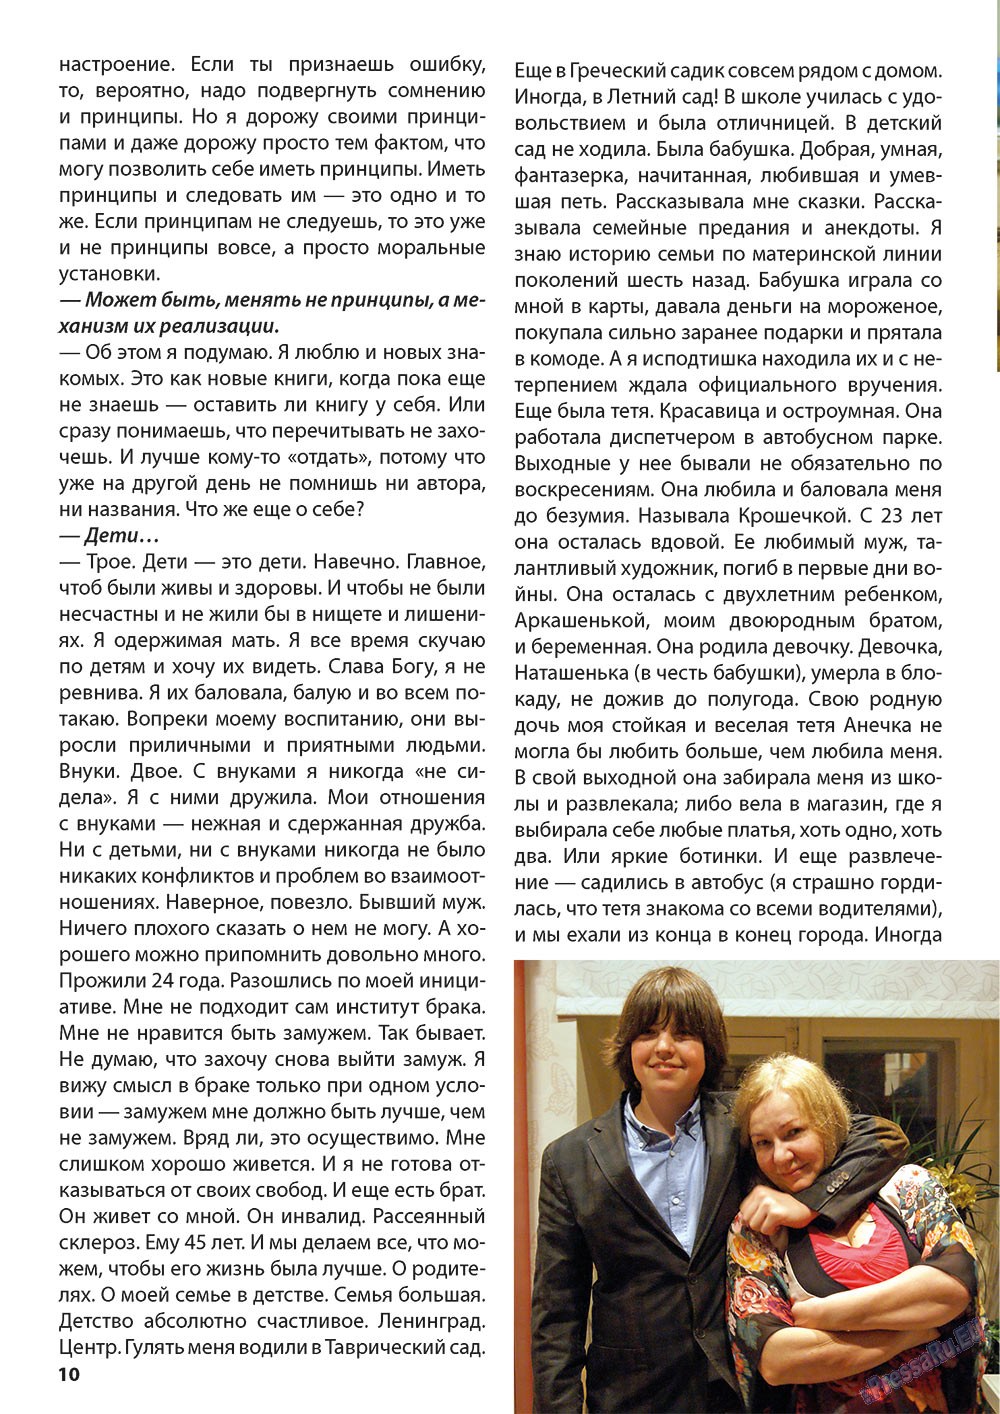 Wadim, журнал. 2013 №1 стр.10